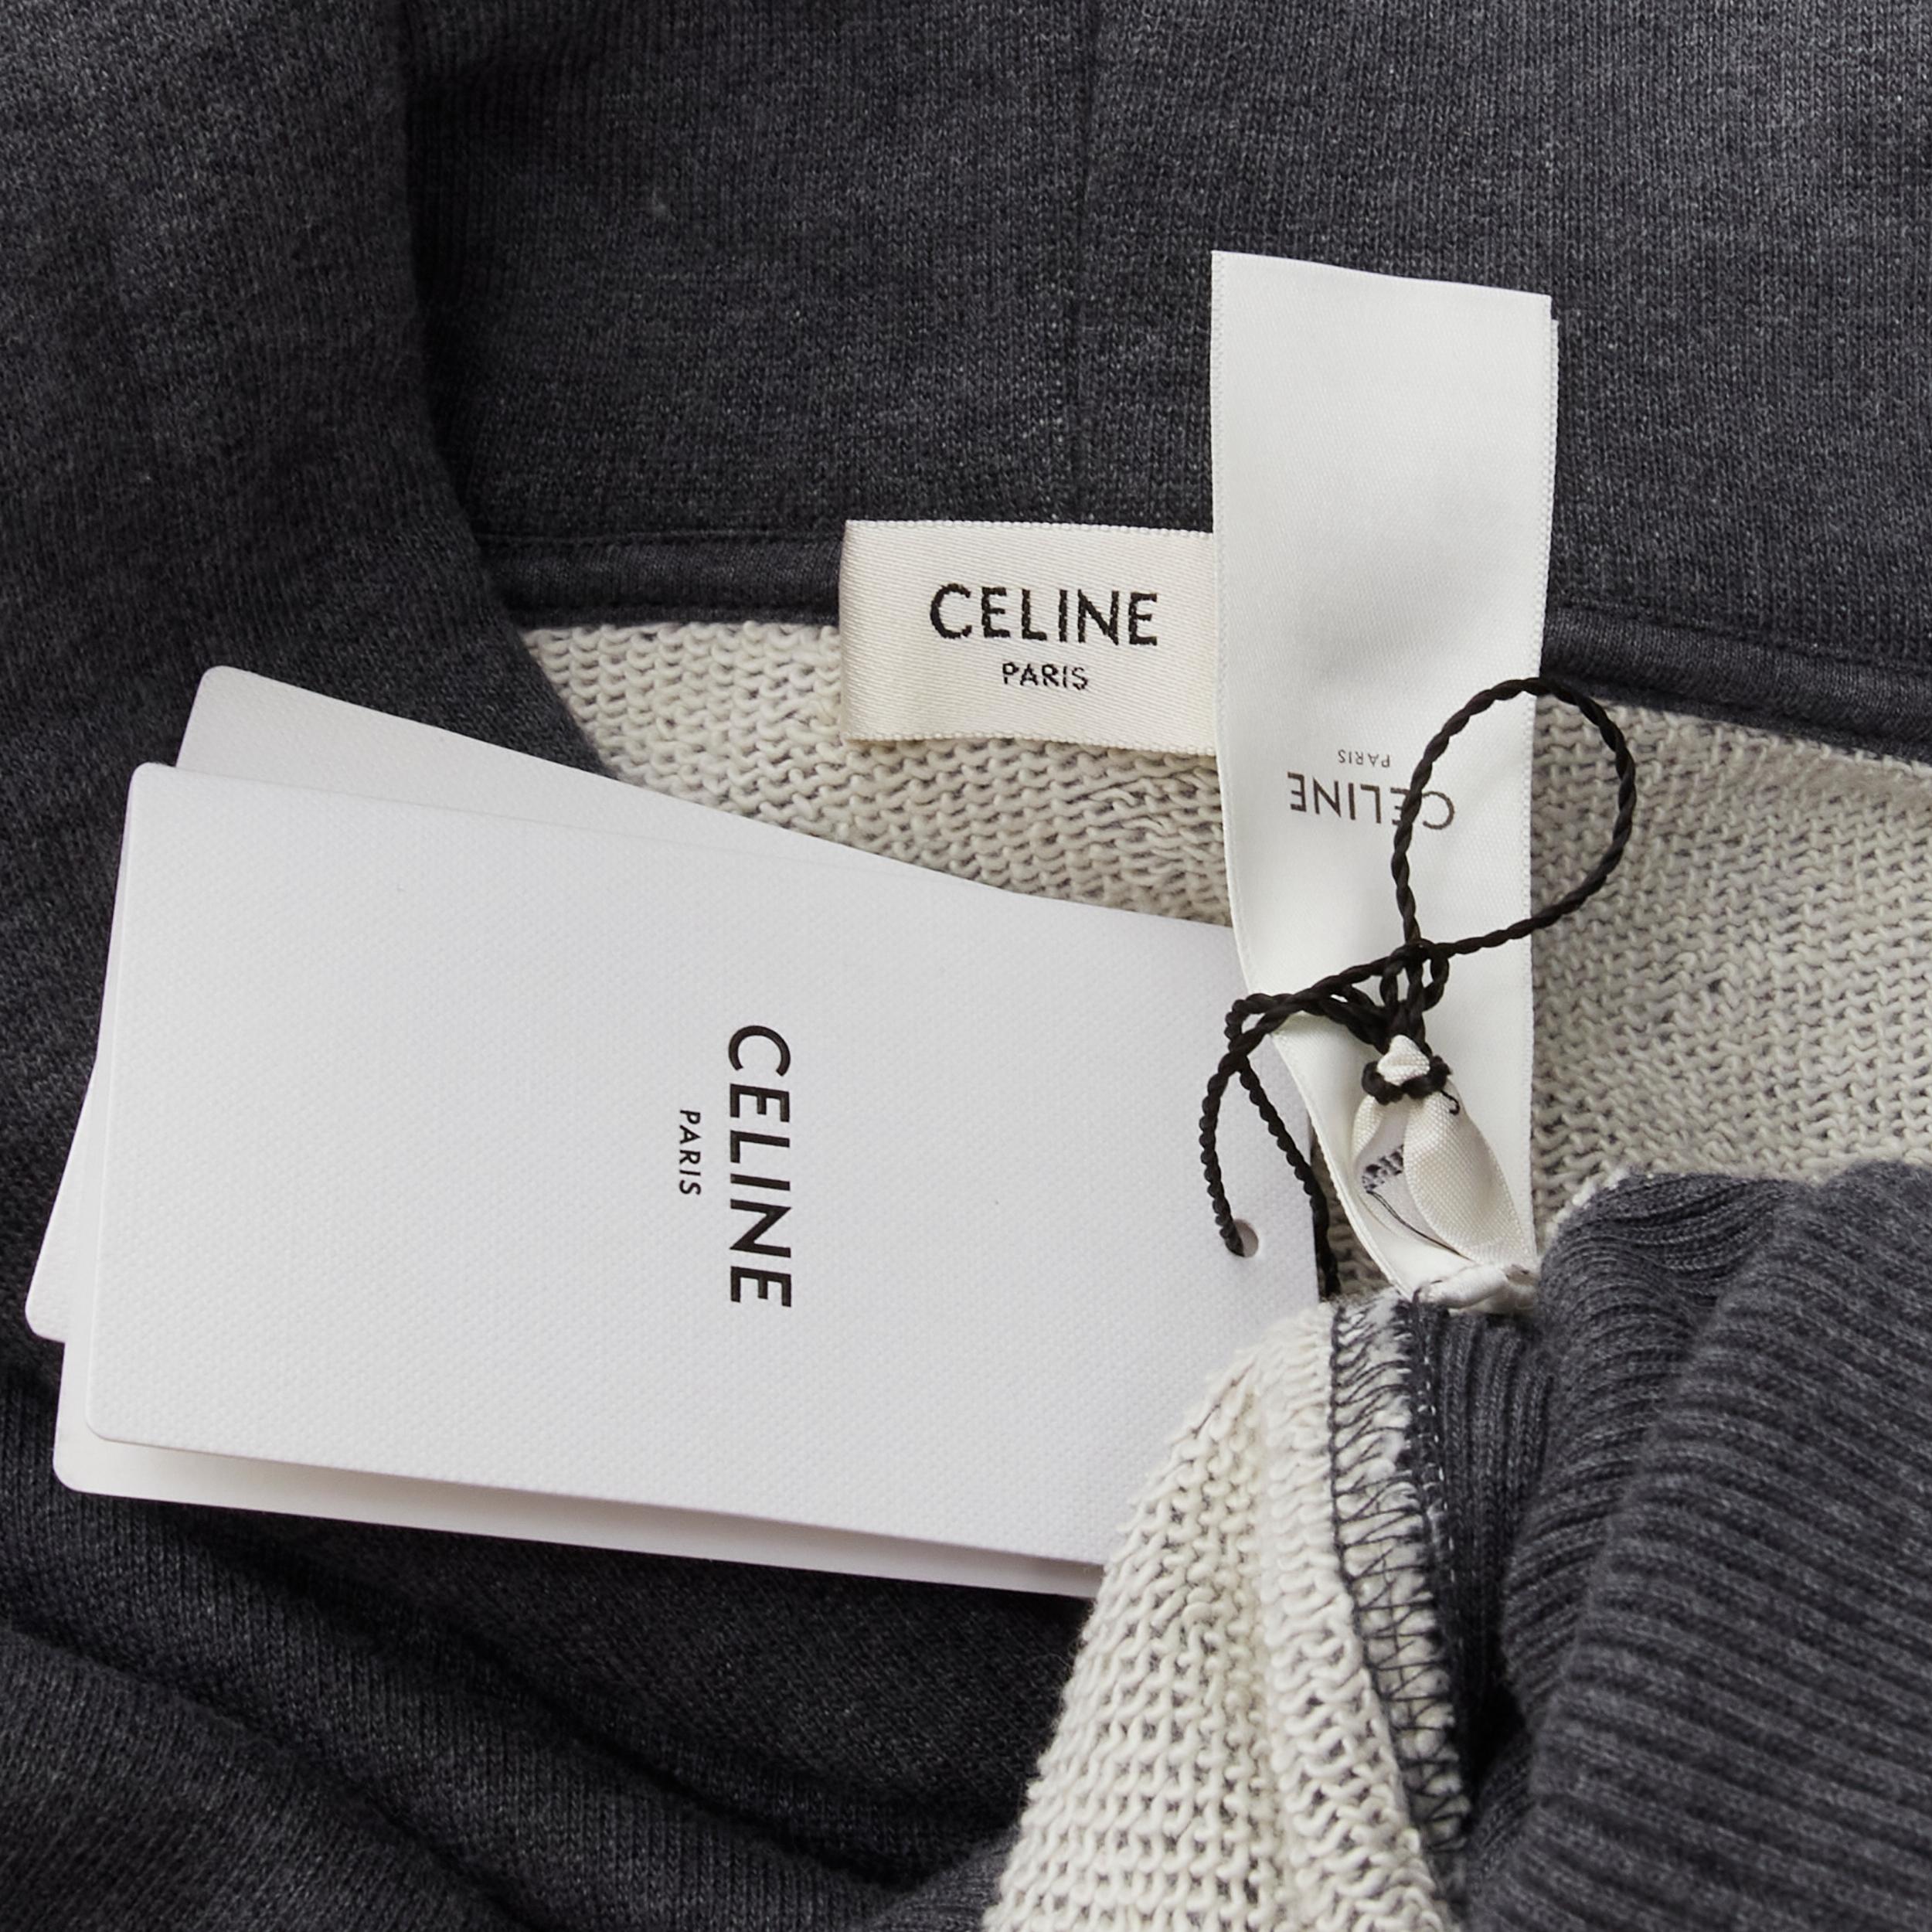 new CELINE Hedi Slimane dark grey cotton gold logo embroidery hoodie pullover S 2